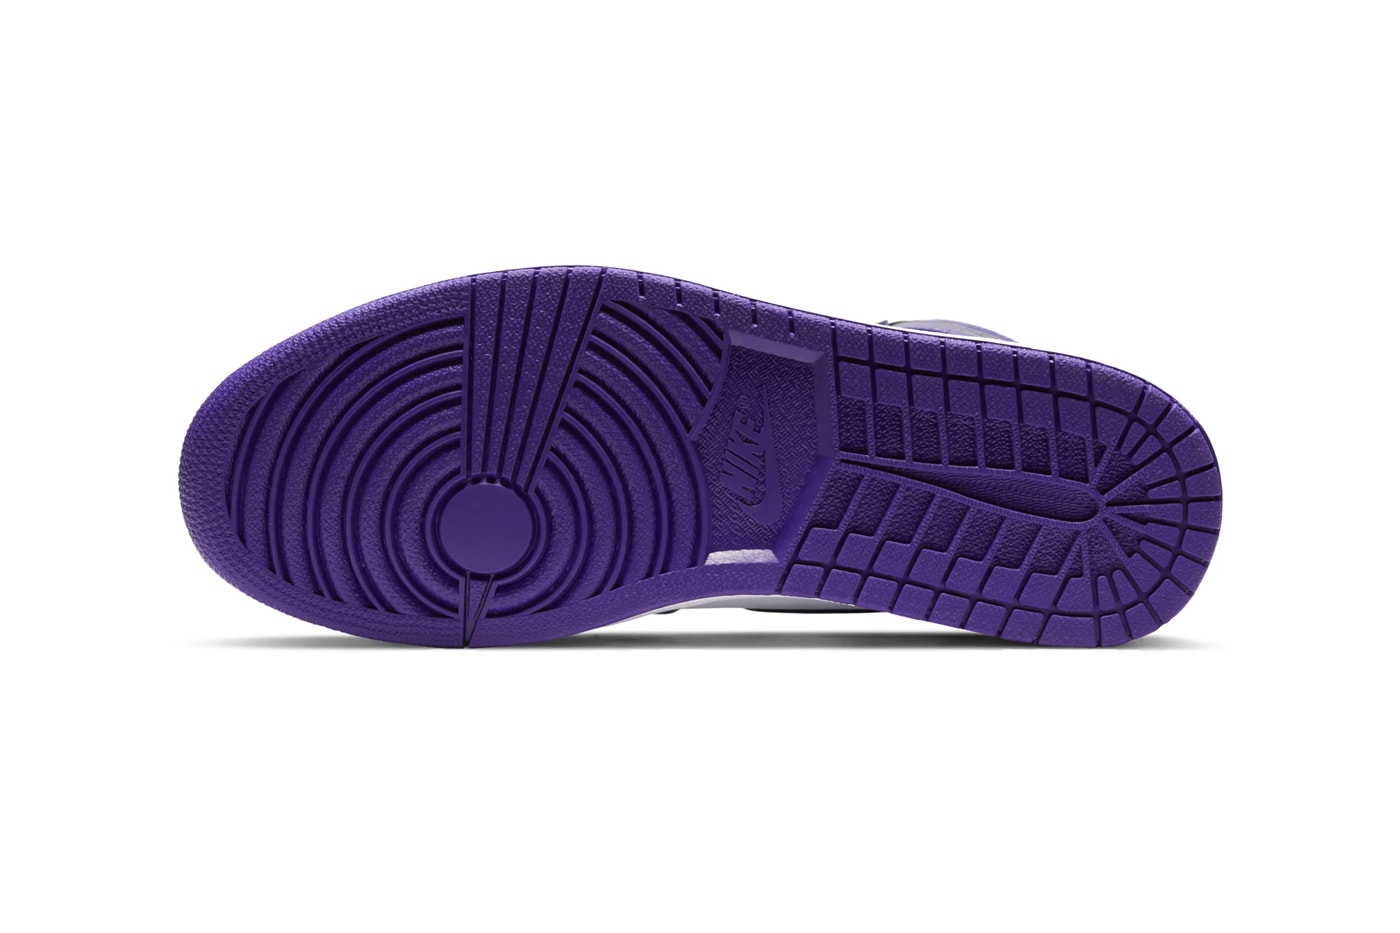 Jordan Air Jordan 1 Retro High OG Court Purple Sneakers for Men